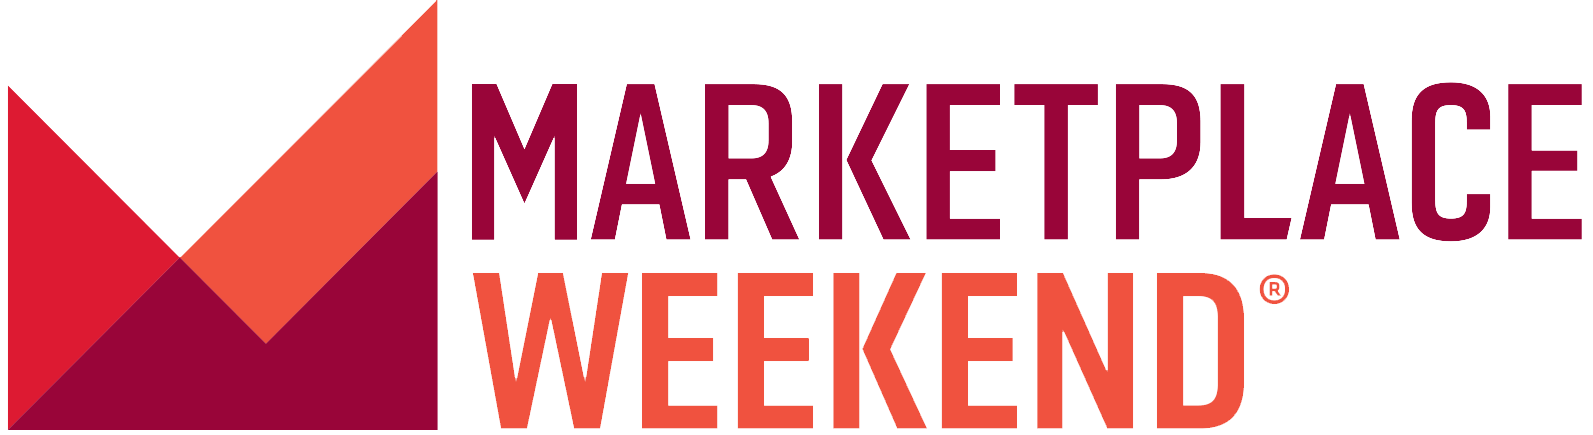 Marketplace Weekend for Friday, September 9, 2016